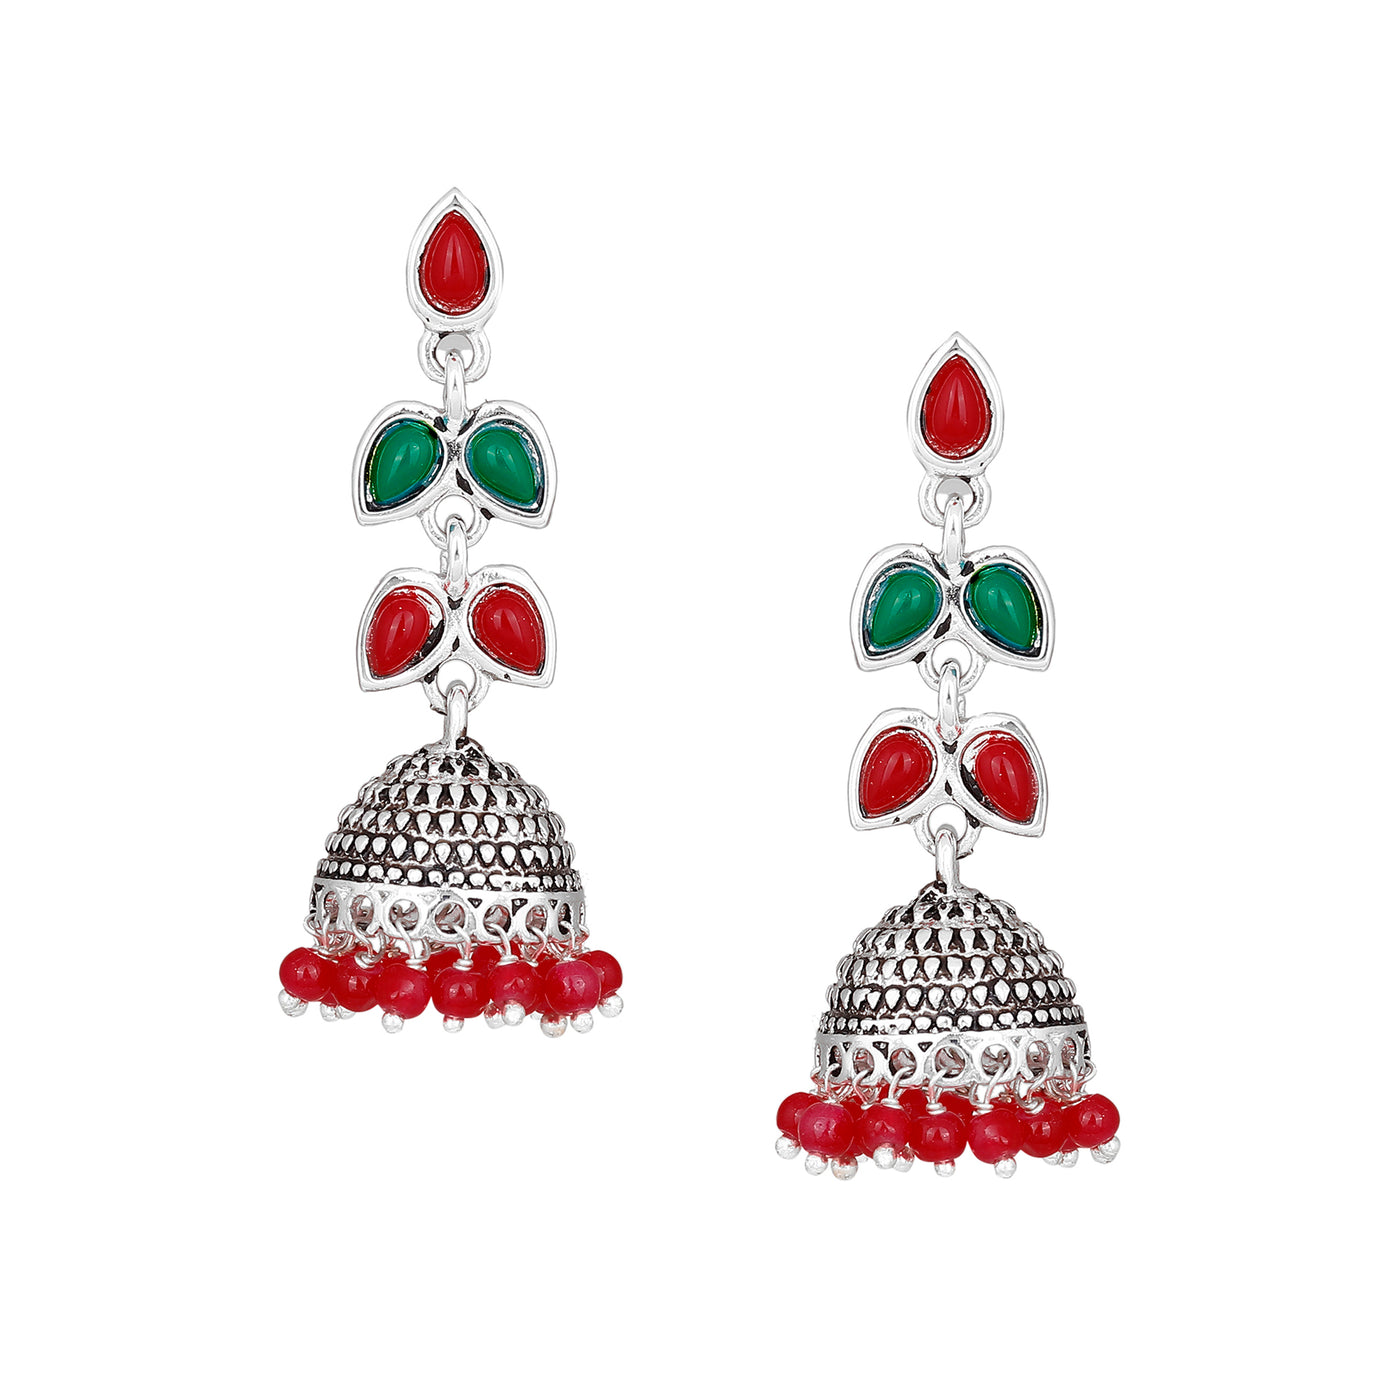 Red colour pearl drop Jhumka Earrings